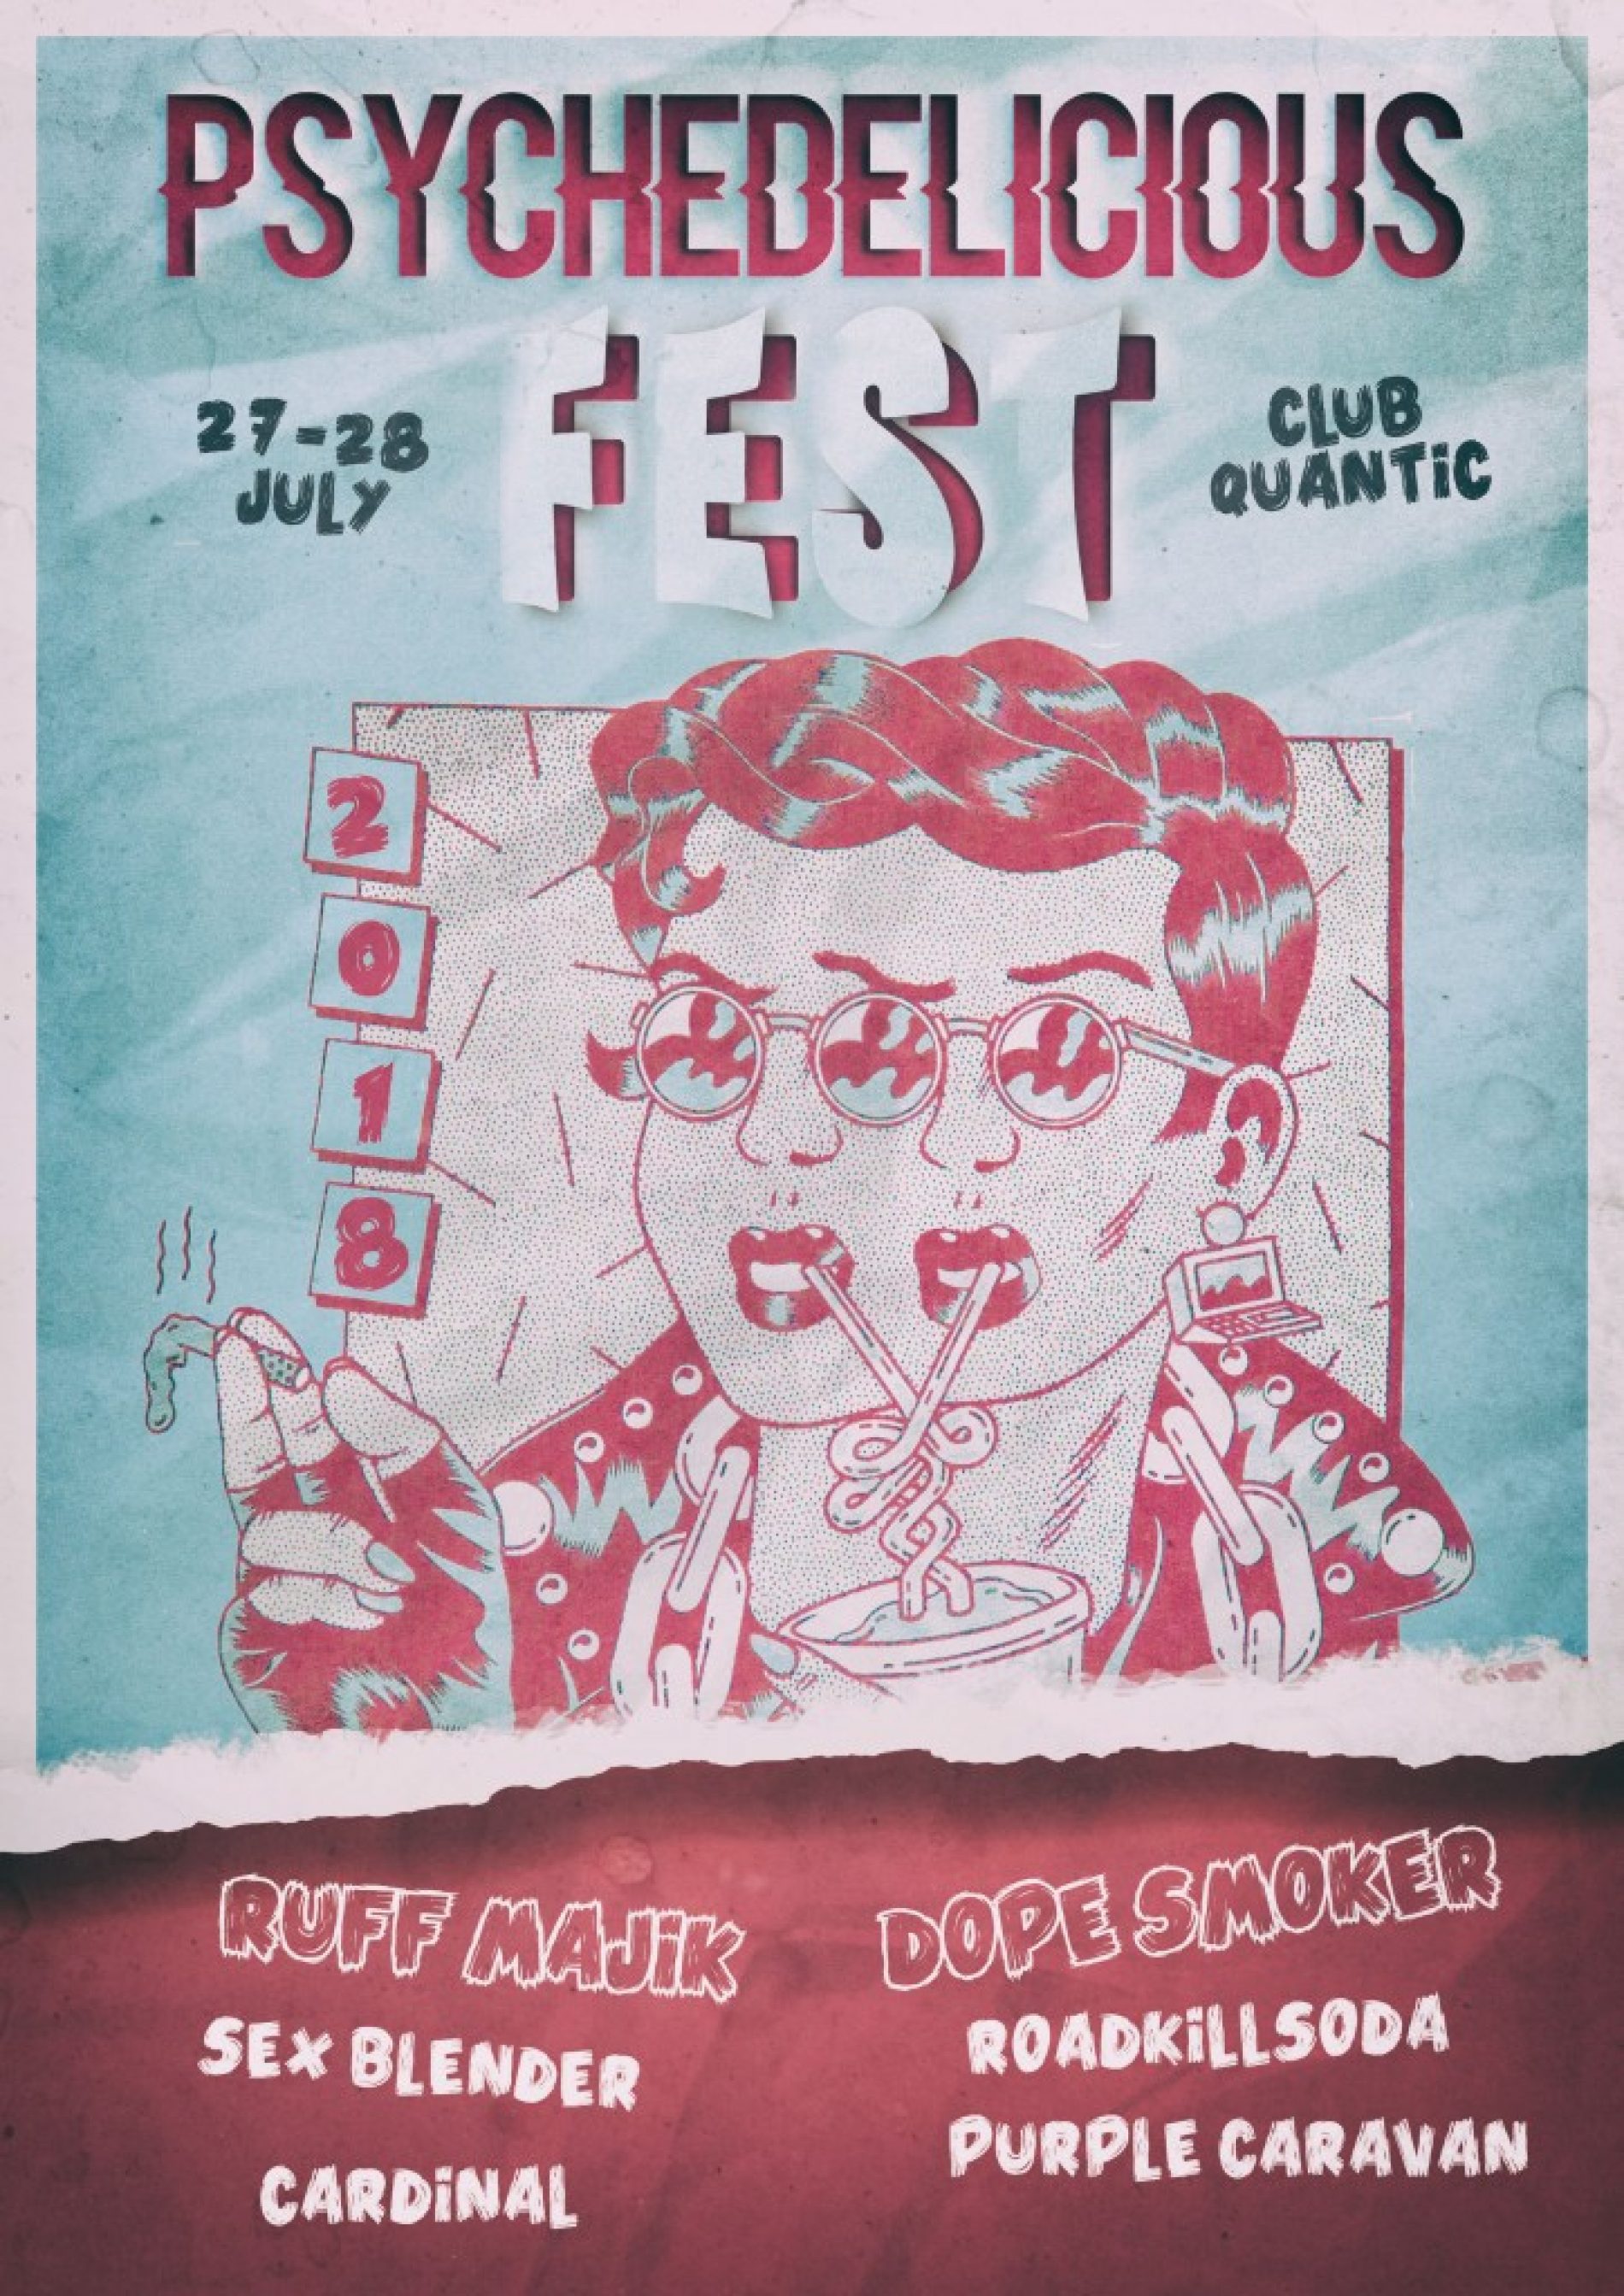 Prima ediție a festivalului Psychedelicious Fest, pe 27-28 iulie la Club Quantic